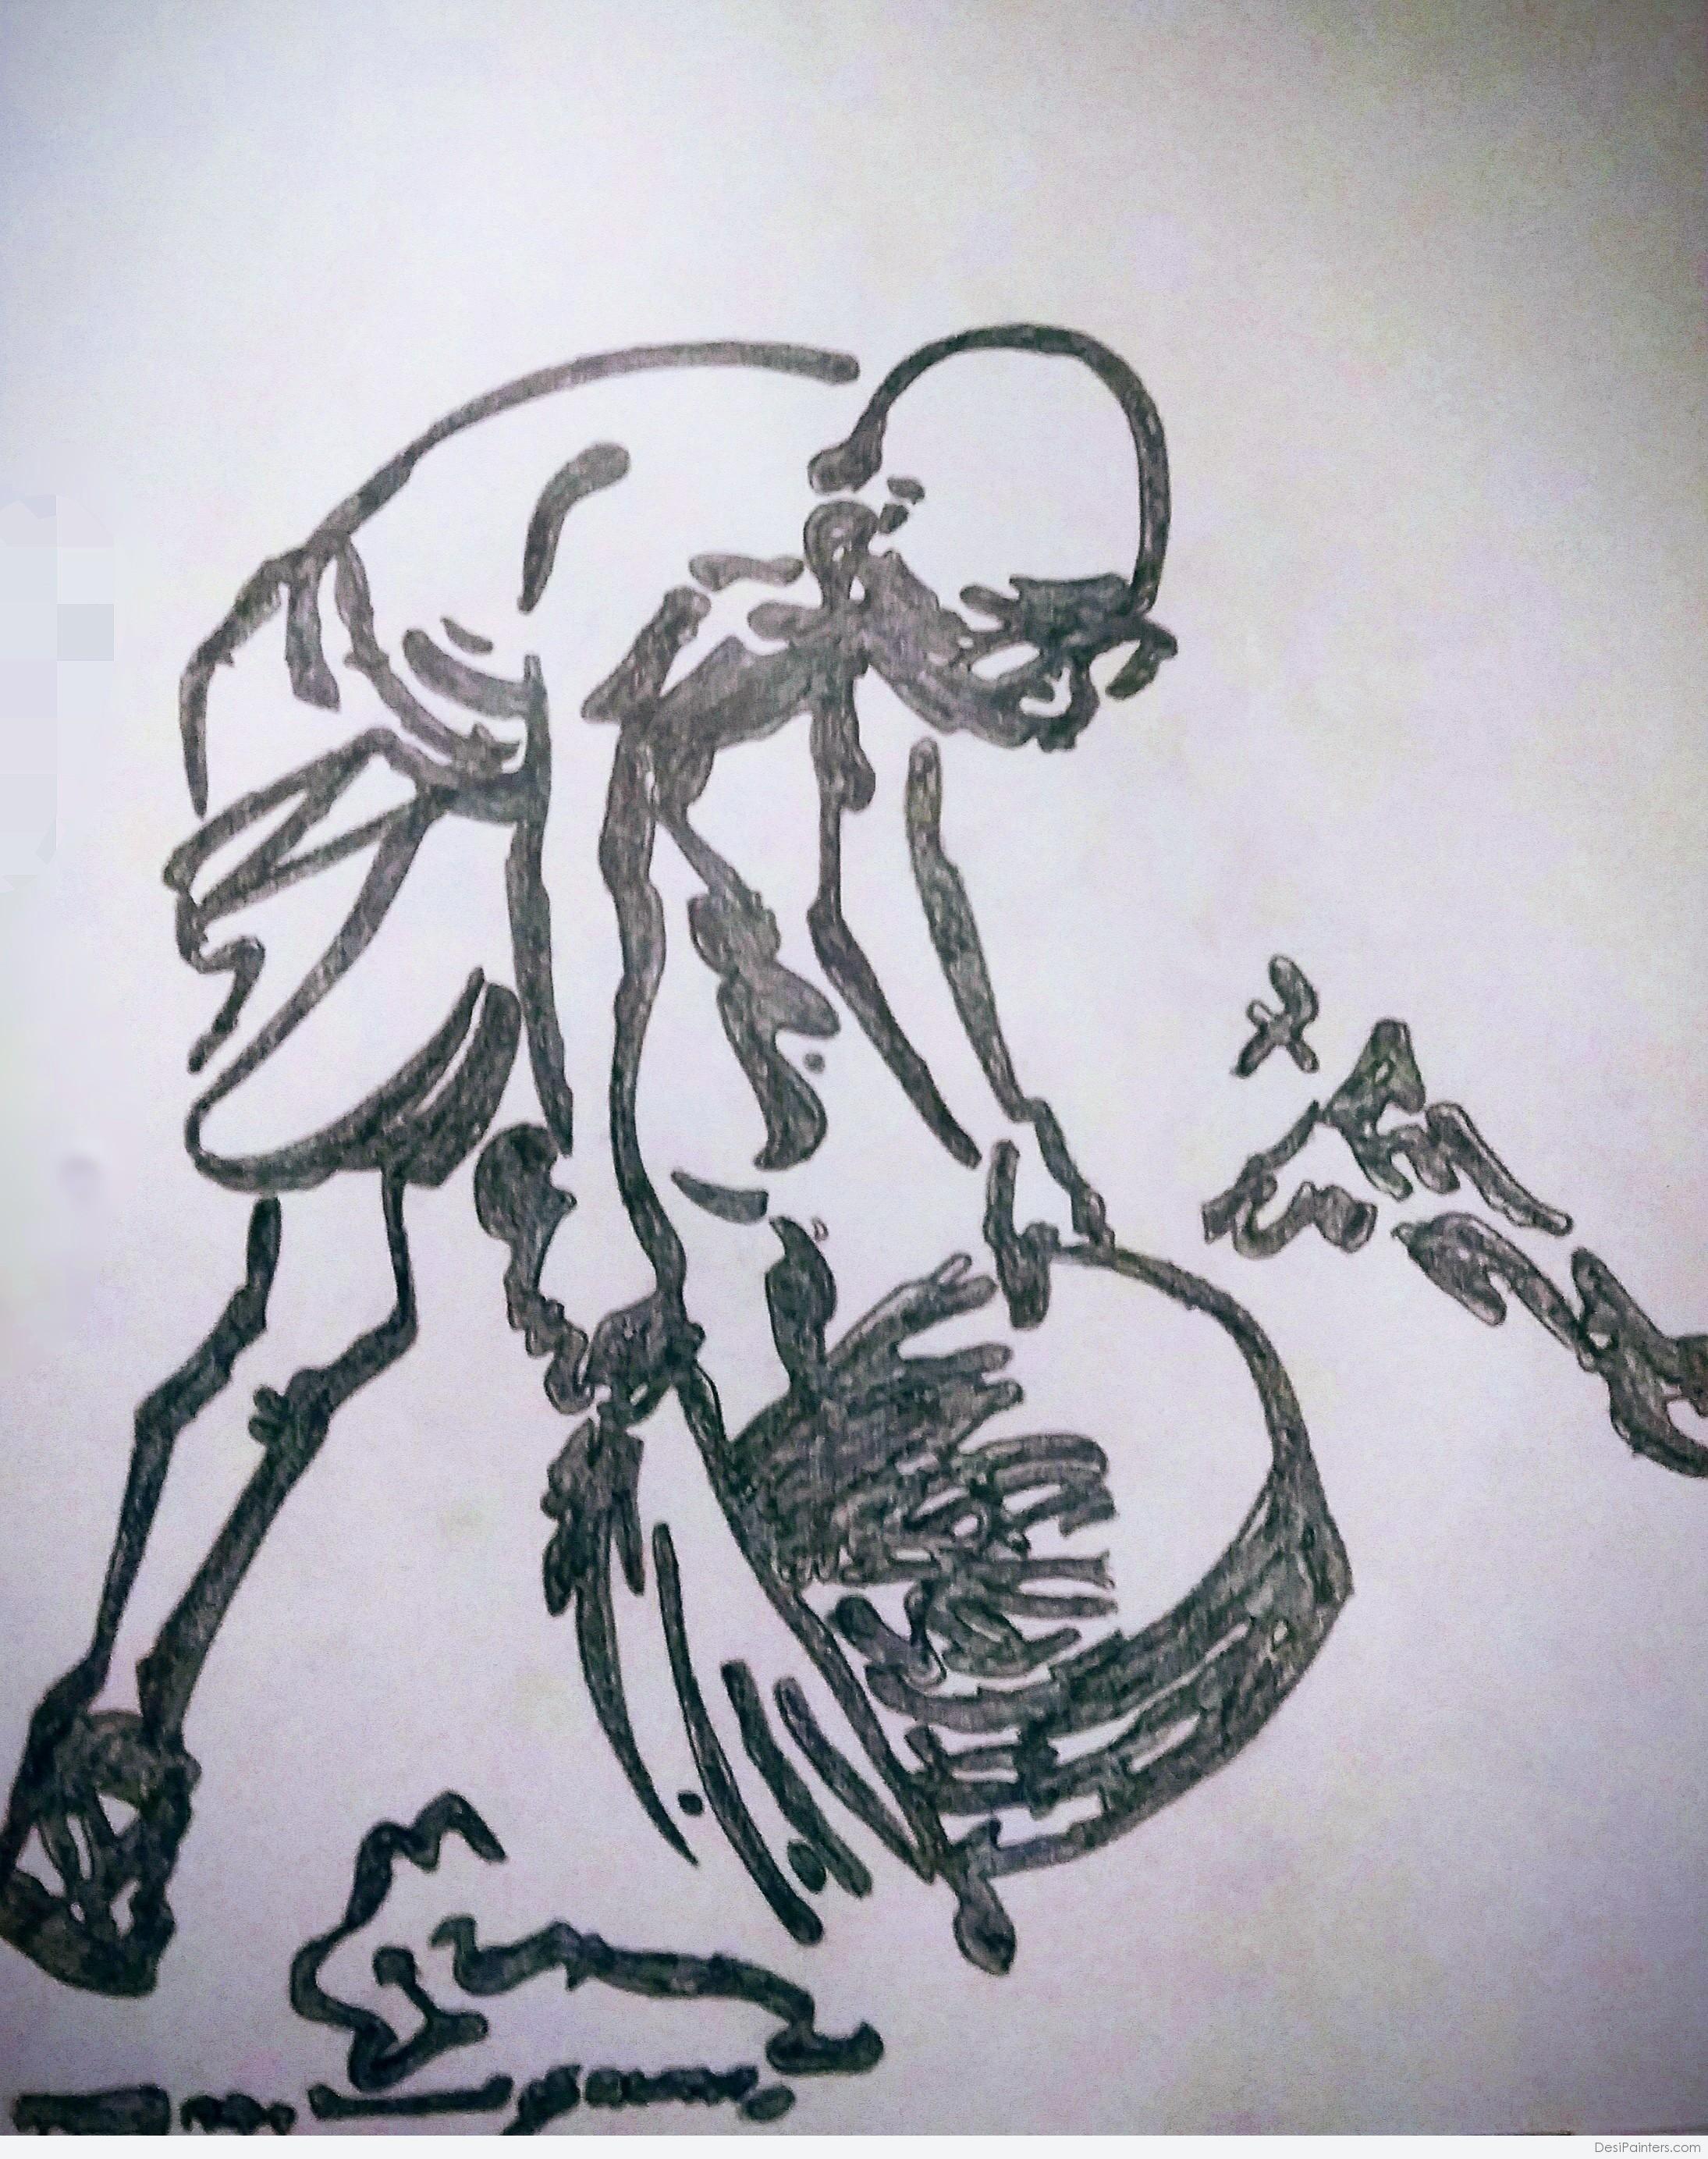 ART / DRAWING / ILLUSTRATION / PAINTING / SKETCHING - Anikartick: Mahatma  Gandhi - Portrait Art and his history - Essay writing from  http://lifehistoric.blogspot.com - - Artist Anikartick,India